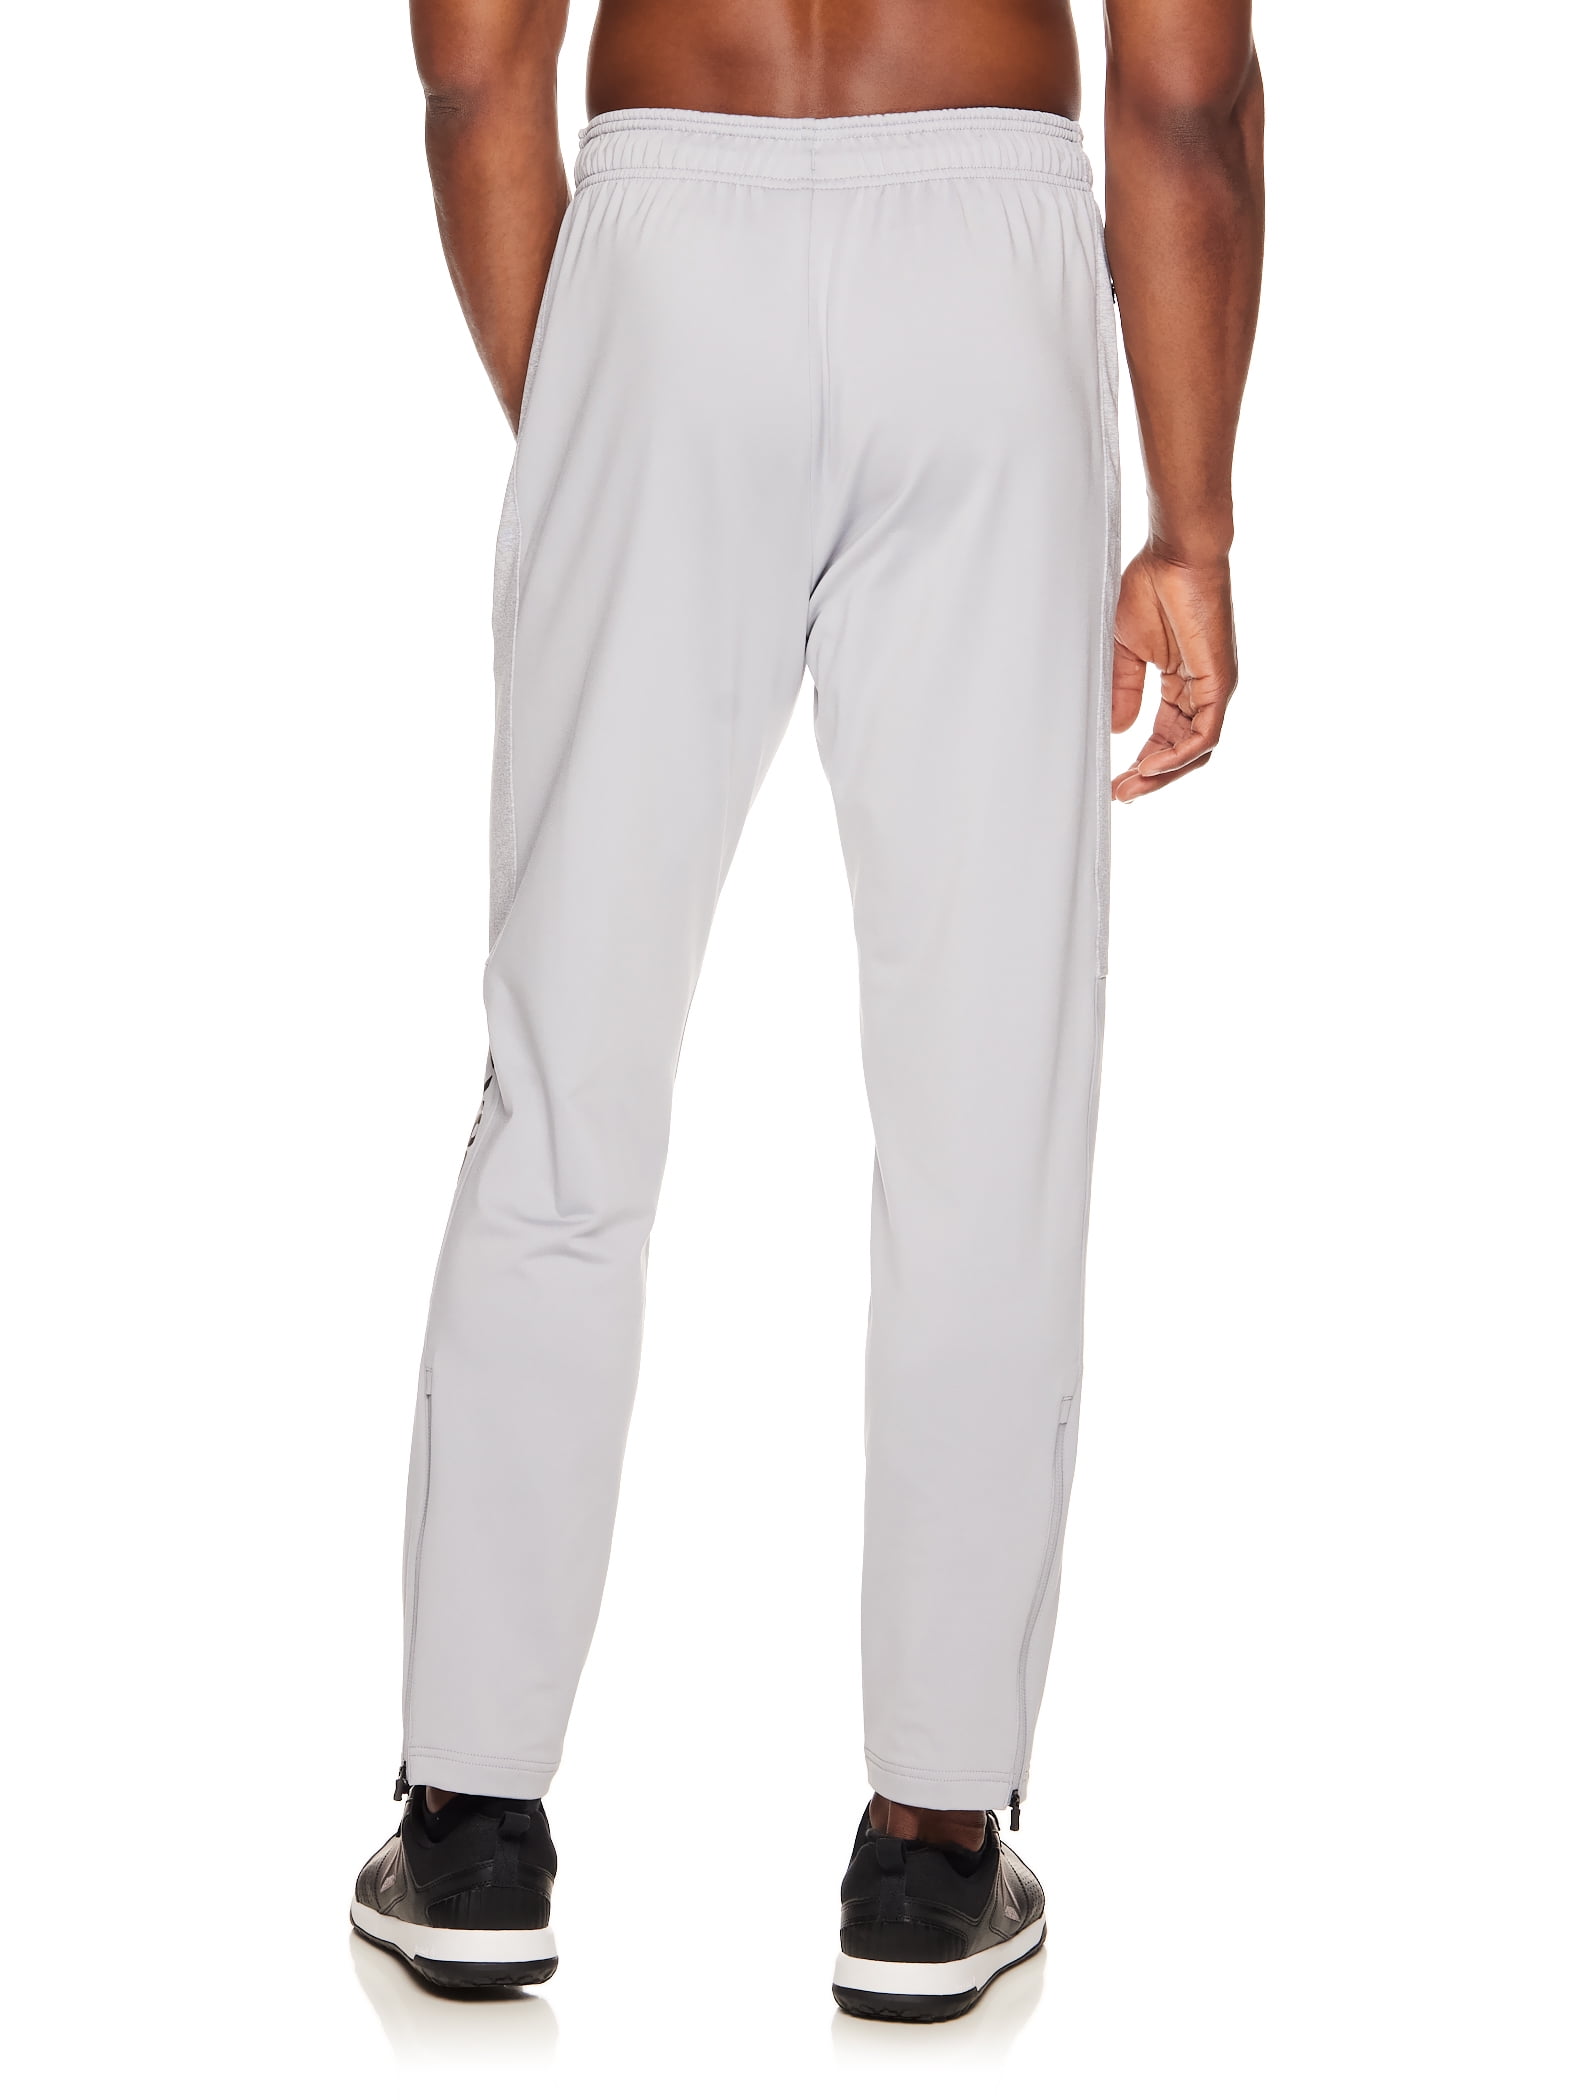 Reebok Men's and Big Men's Recharge Pants, up to Size 3XL - Walmart.com